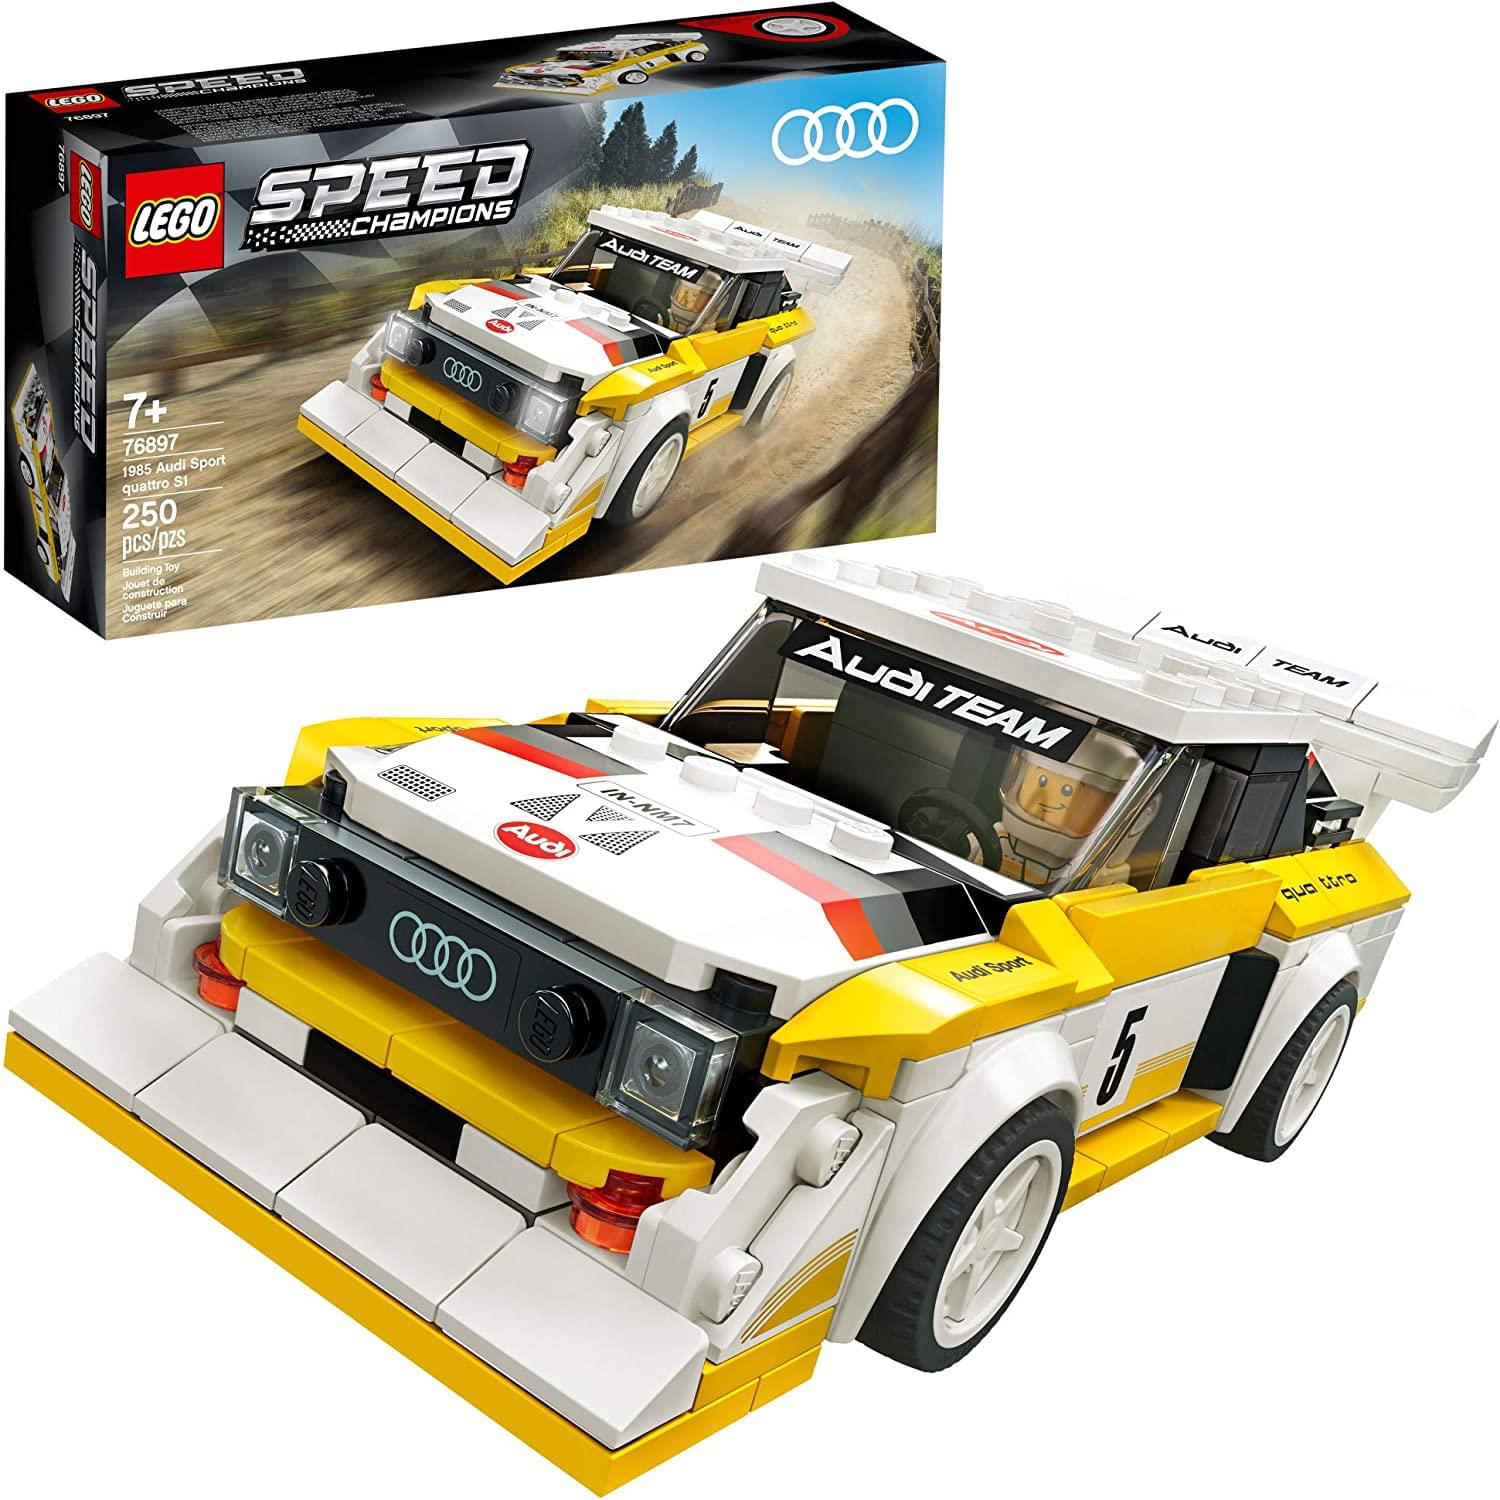 LEGO Speed Champions 76897 1985 Audi Sport Quattro S1 250 Piece Building Set